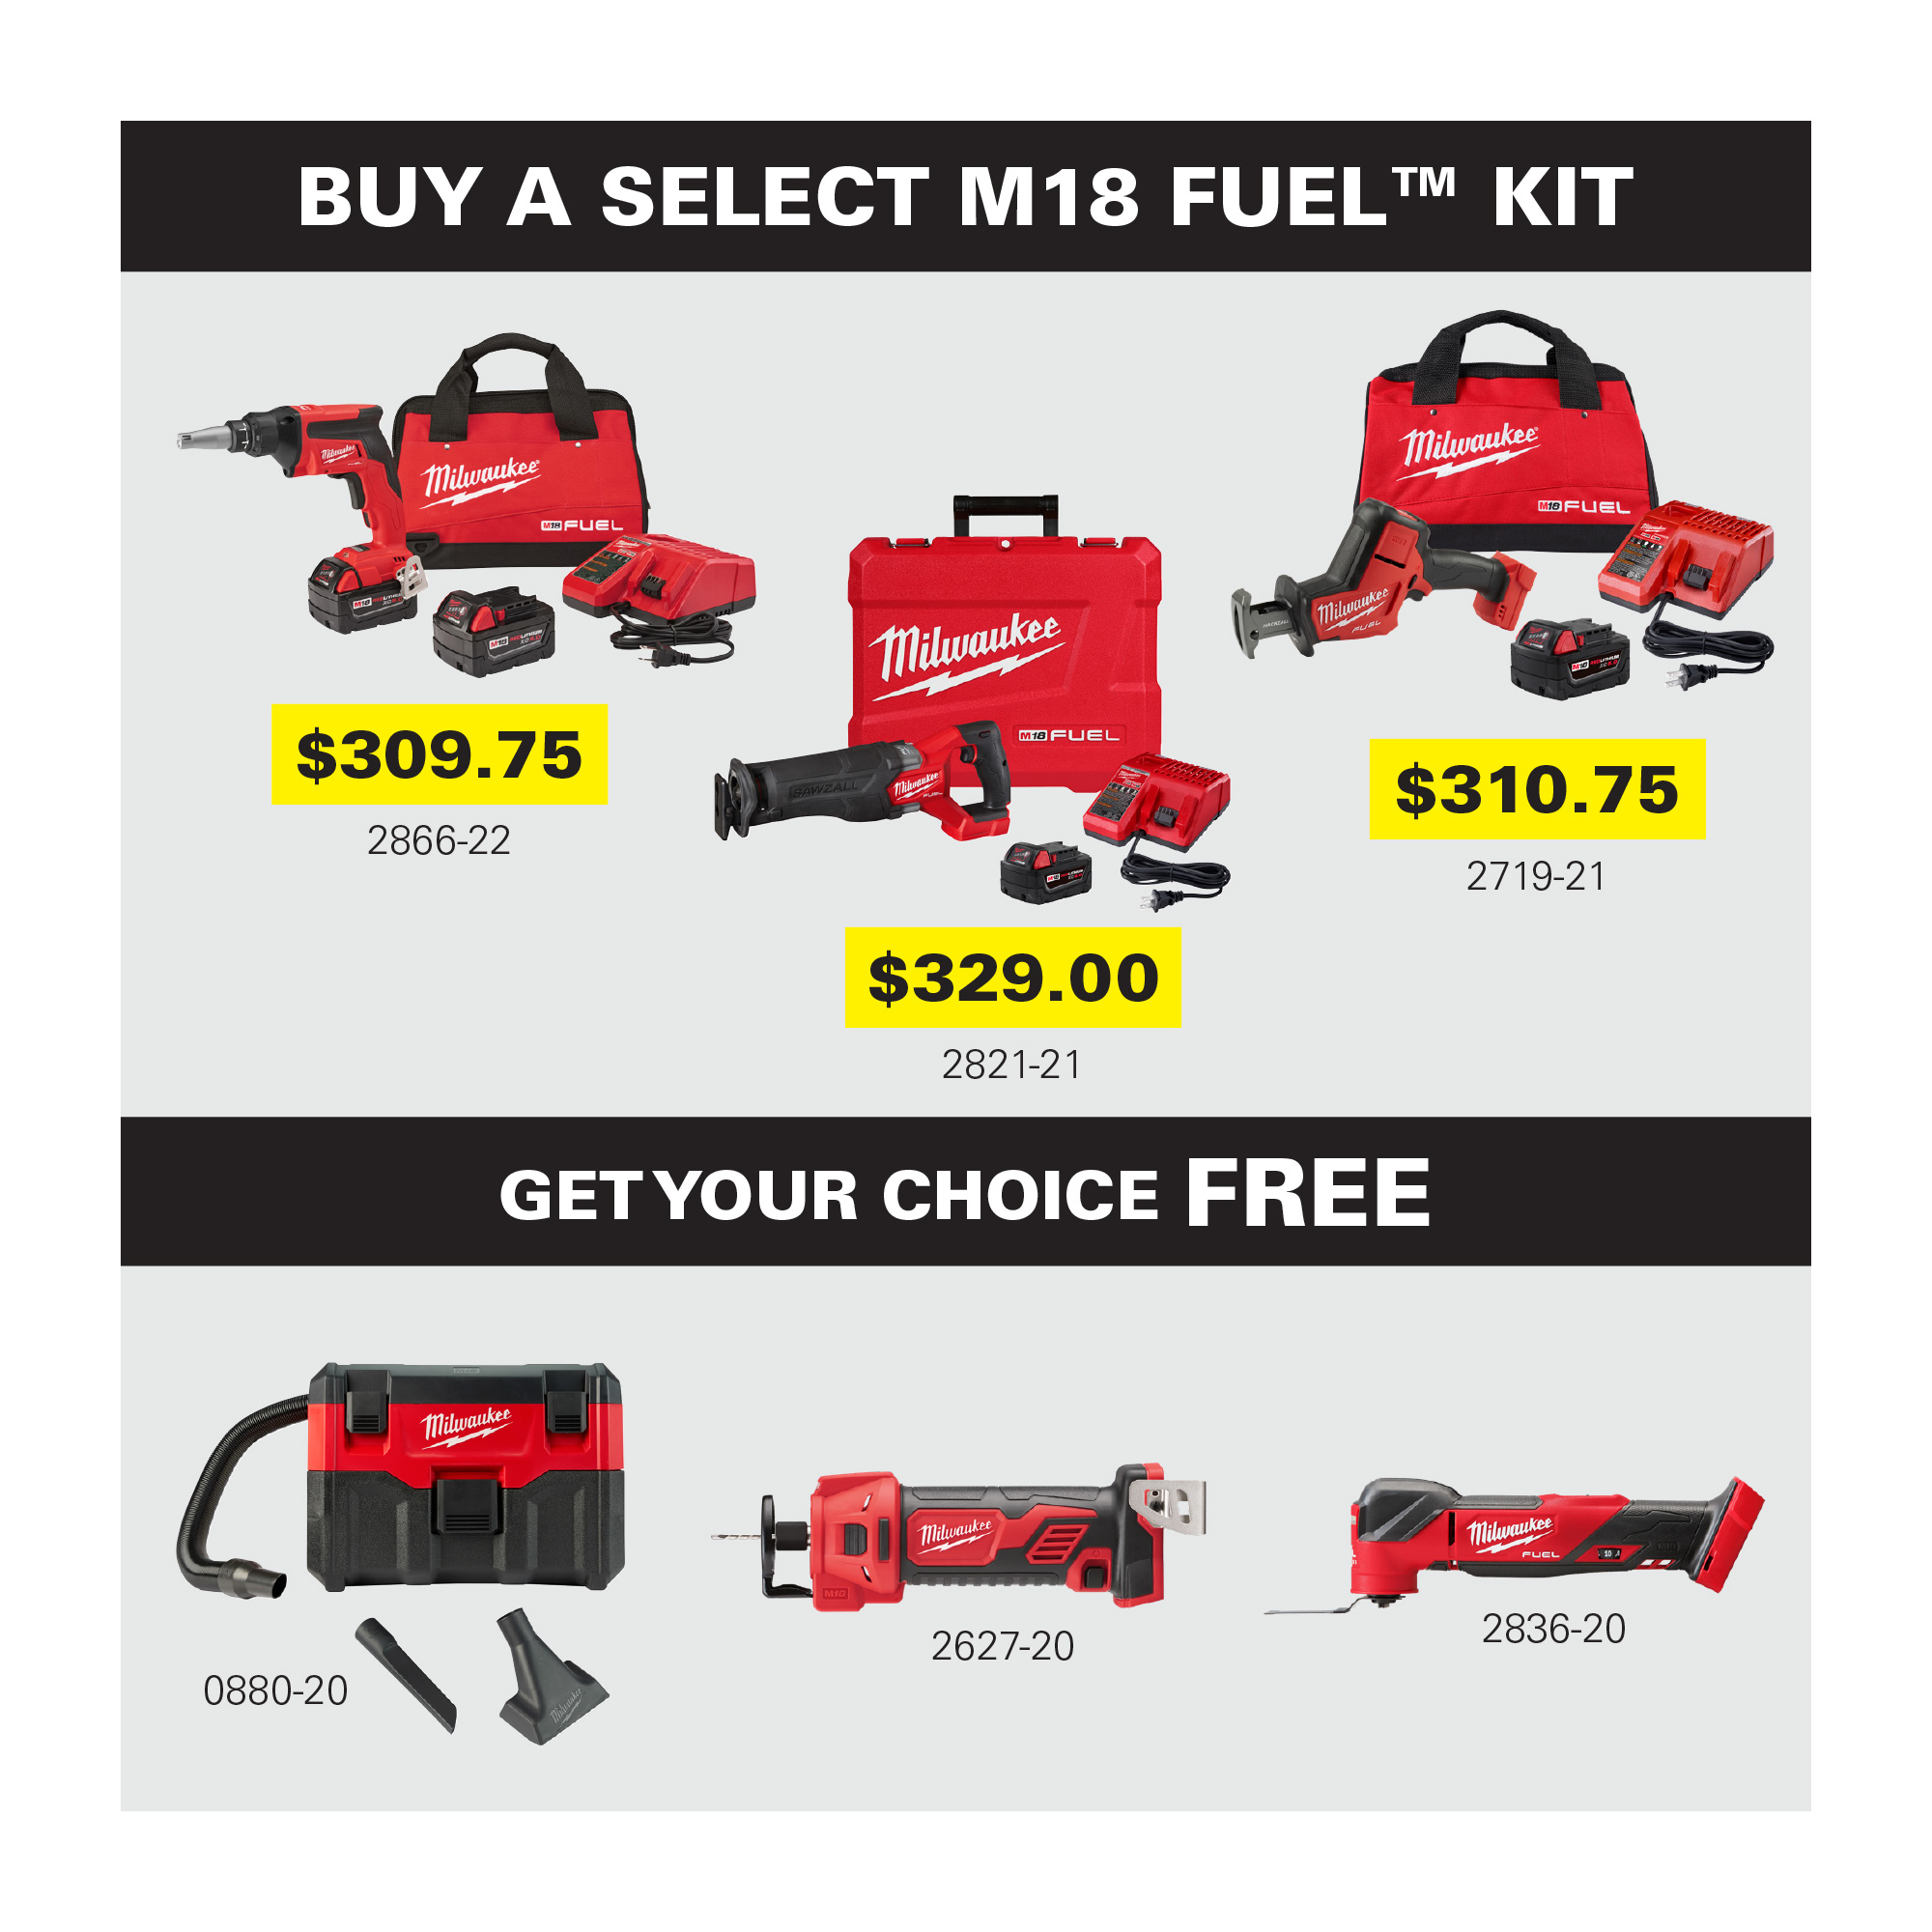 Milwaukee M18 Fuel Kit Promo